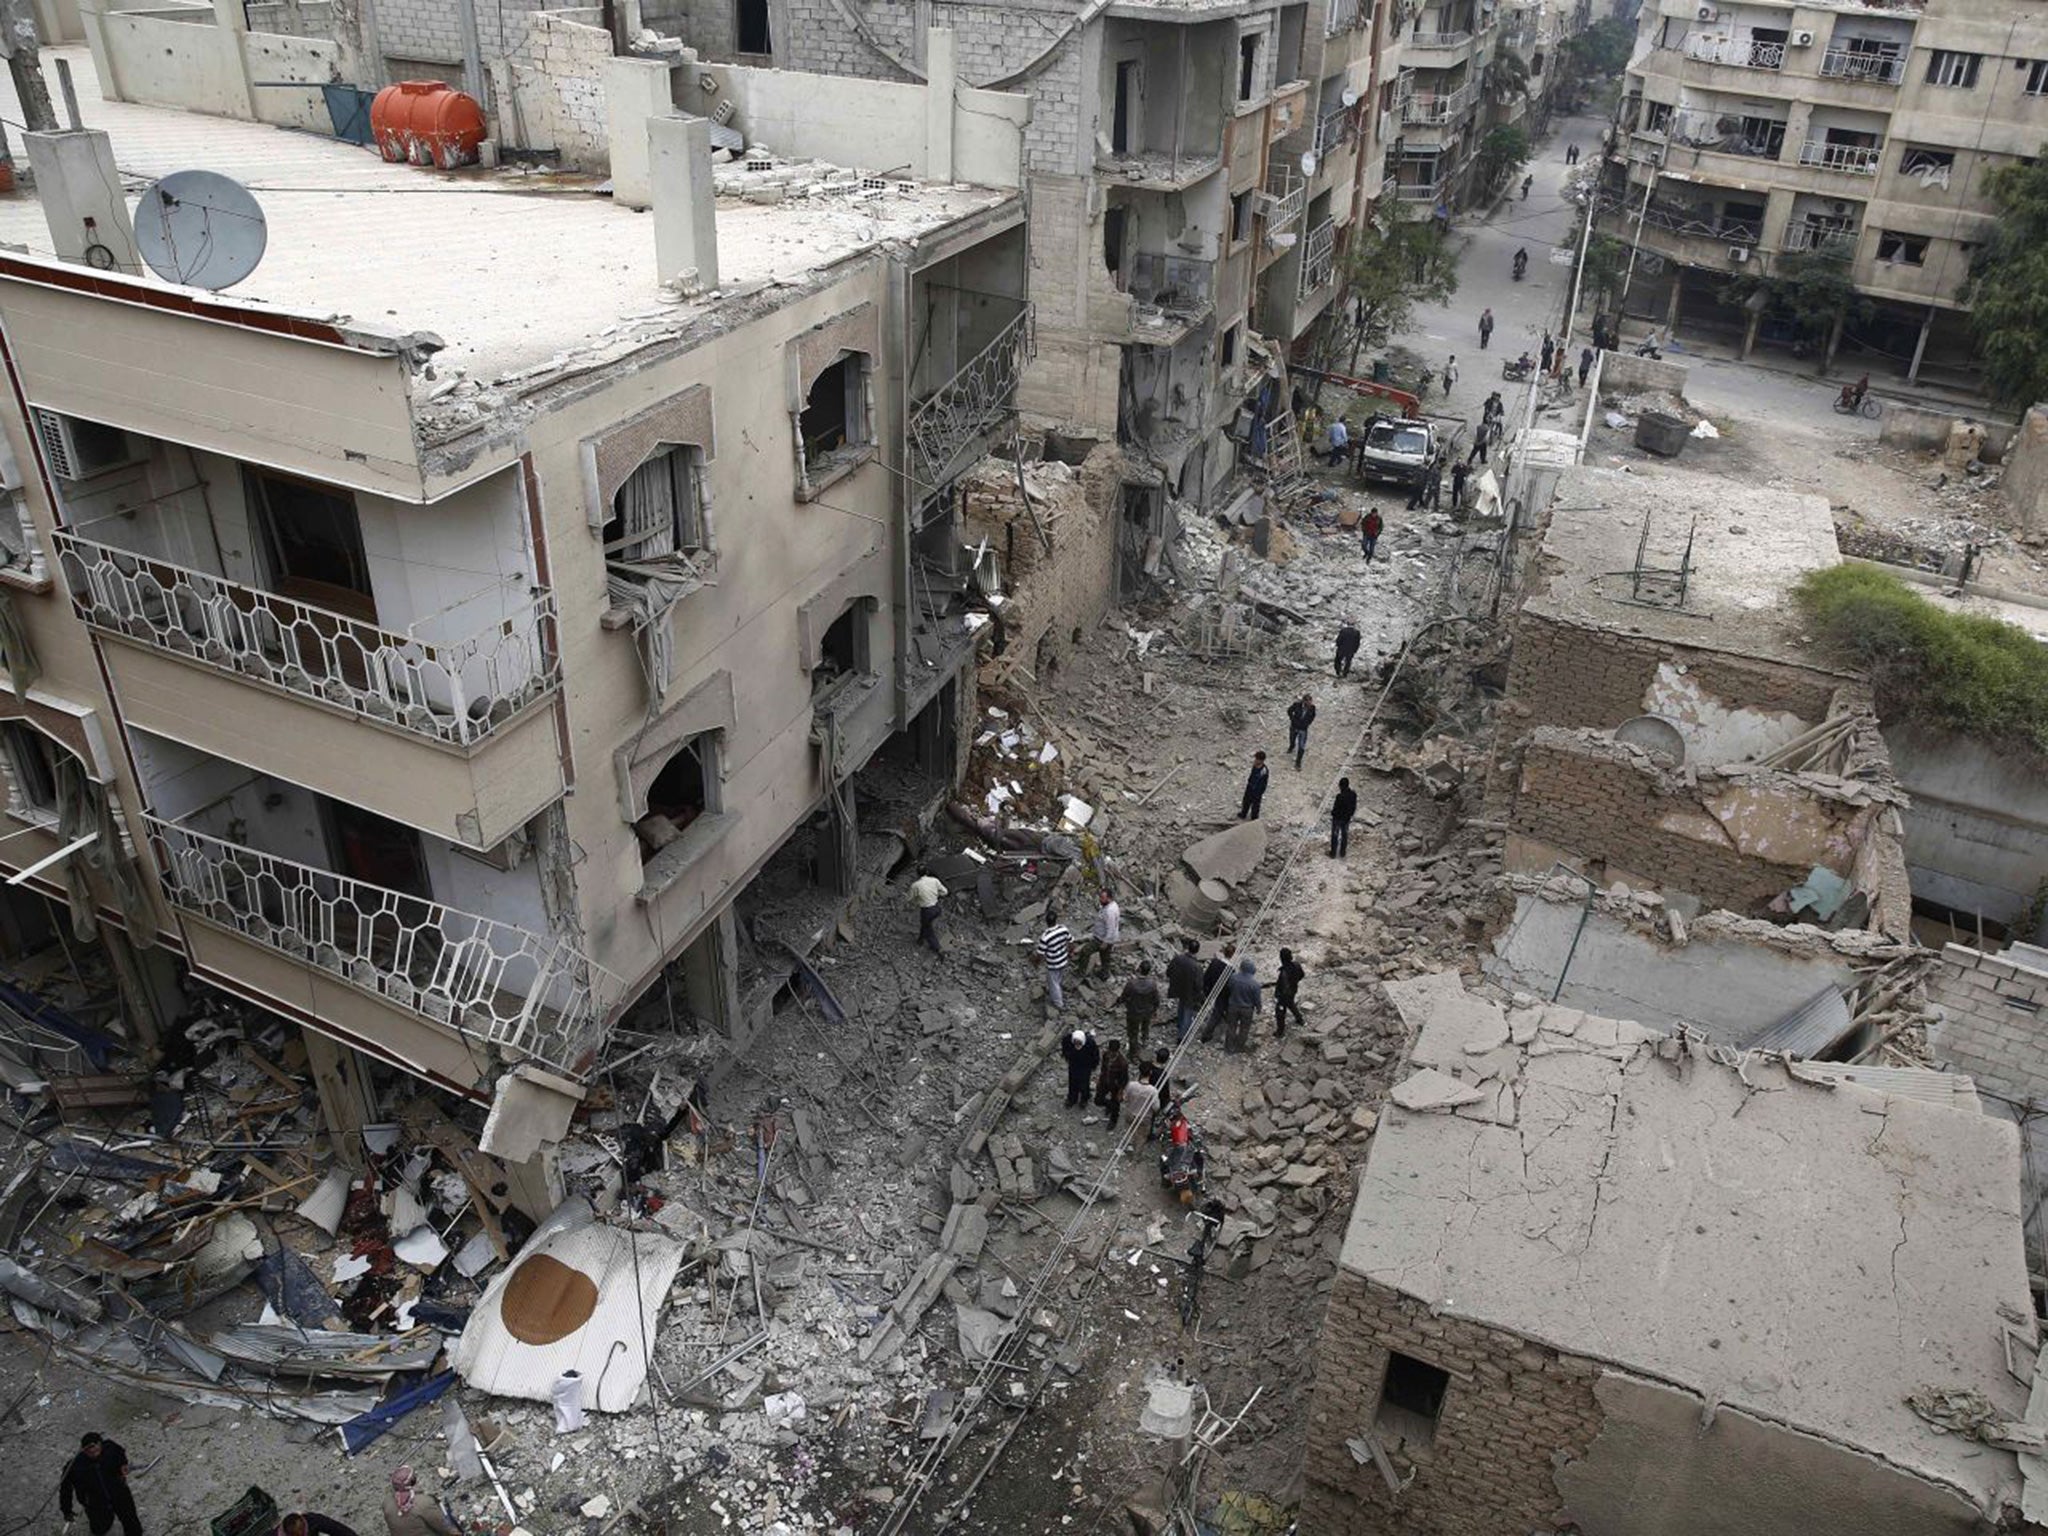 &#13;
Syrians inspecting damaged buildings following an air strike in Douma (Getty)&#13;